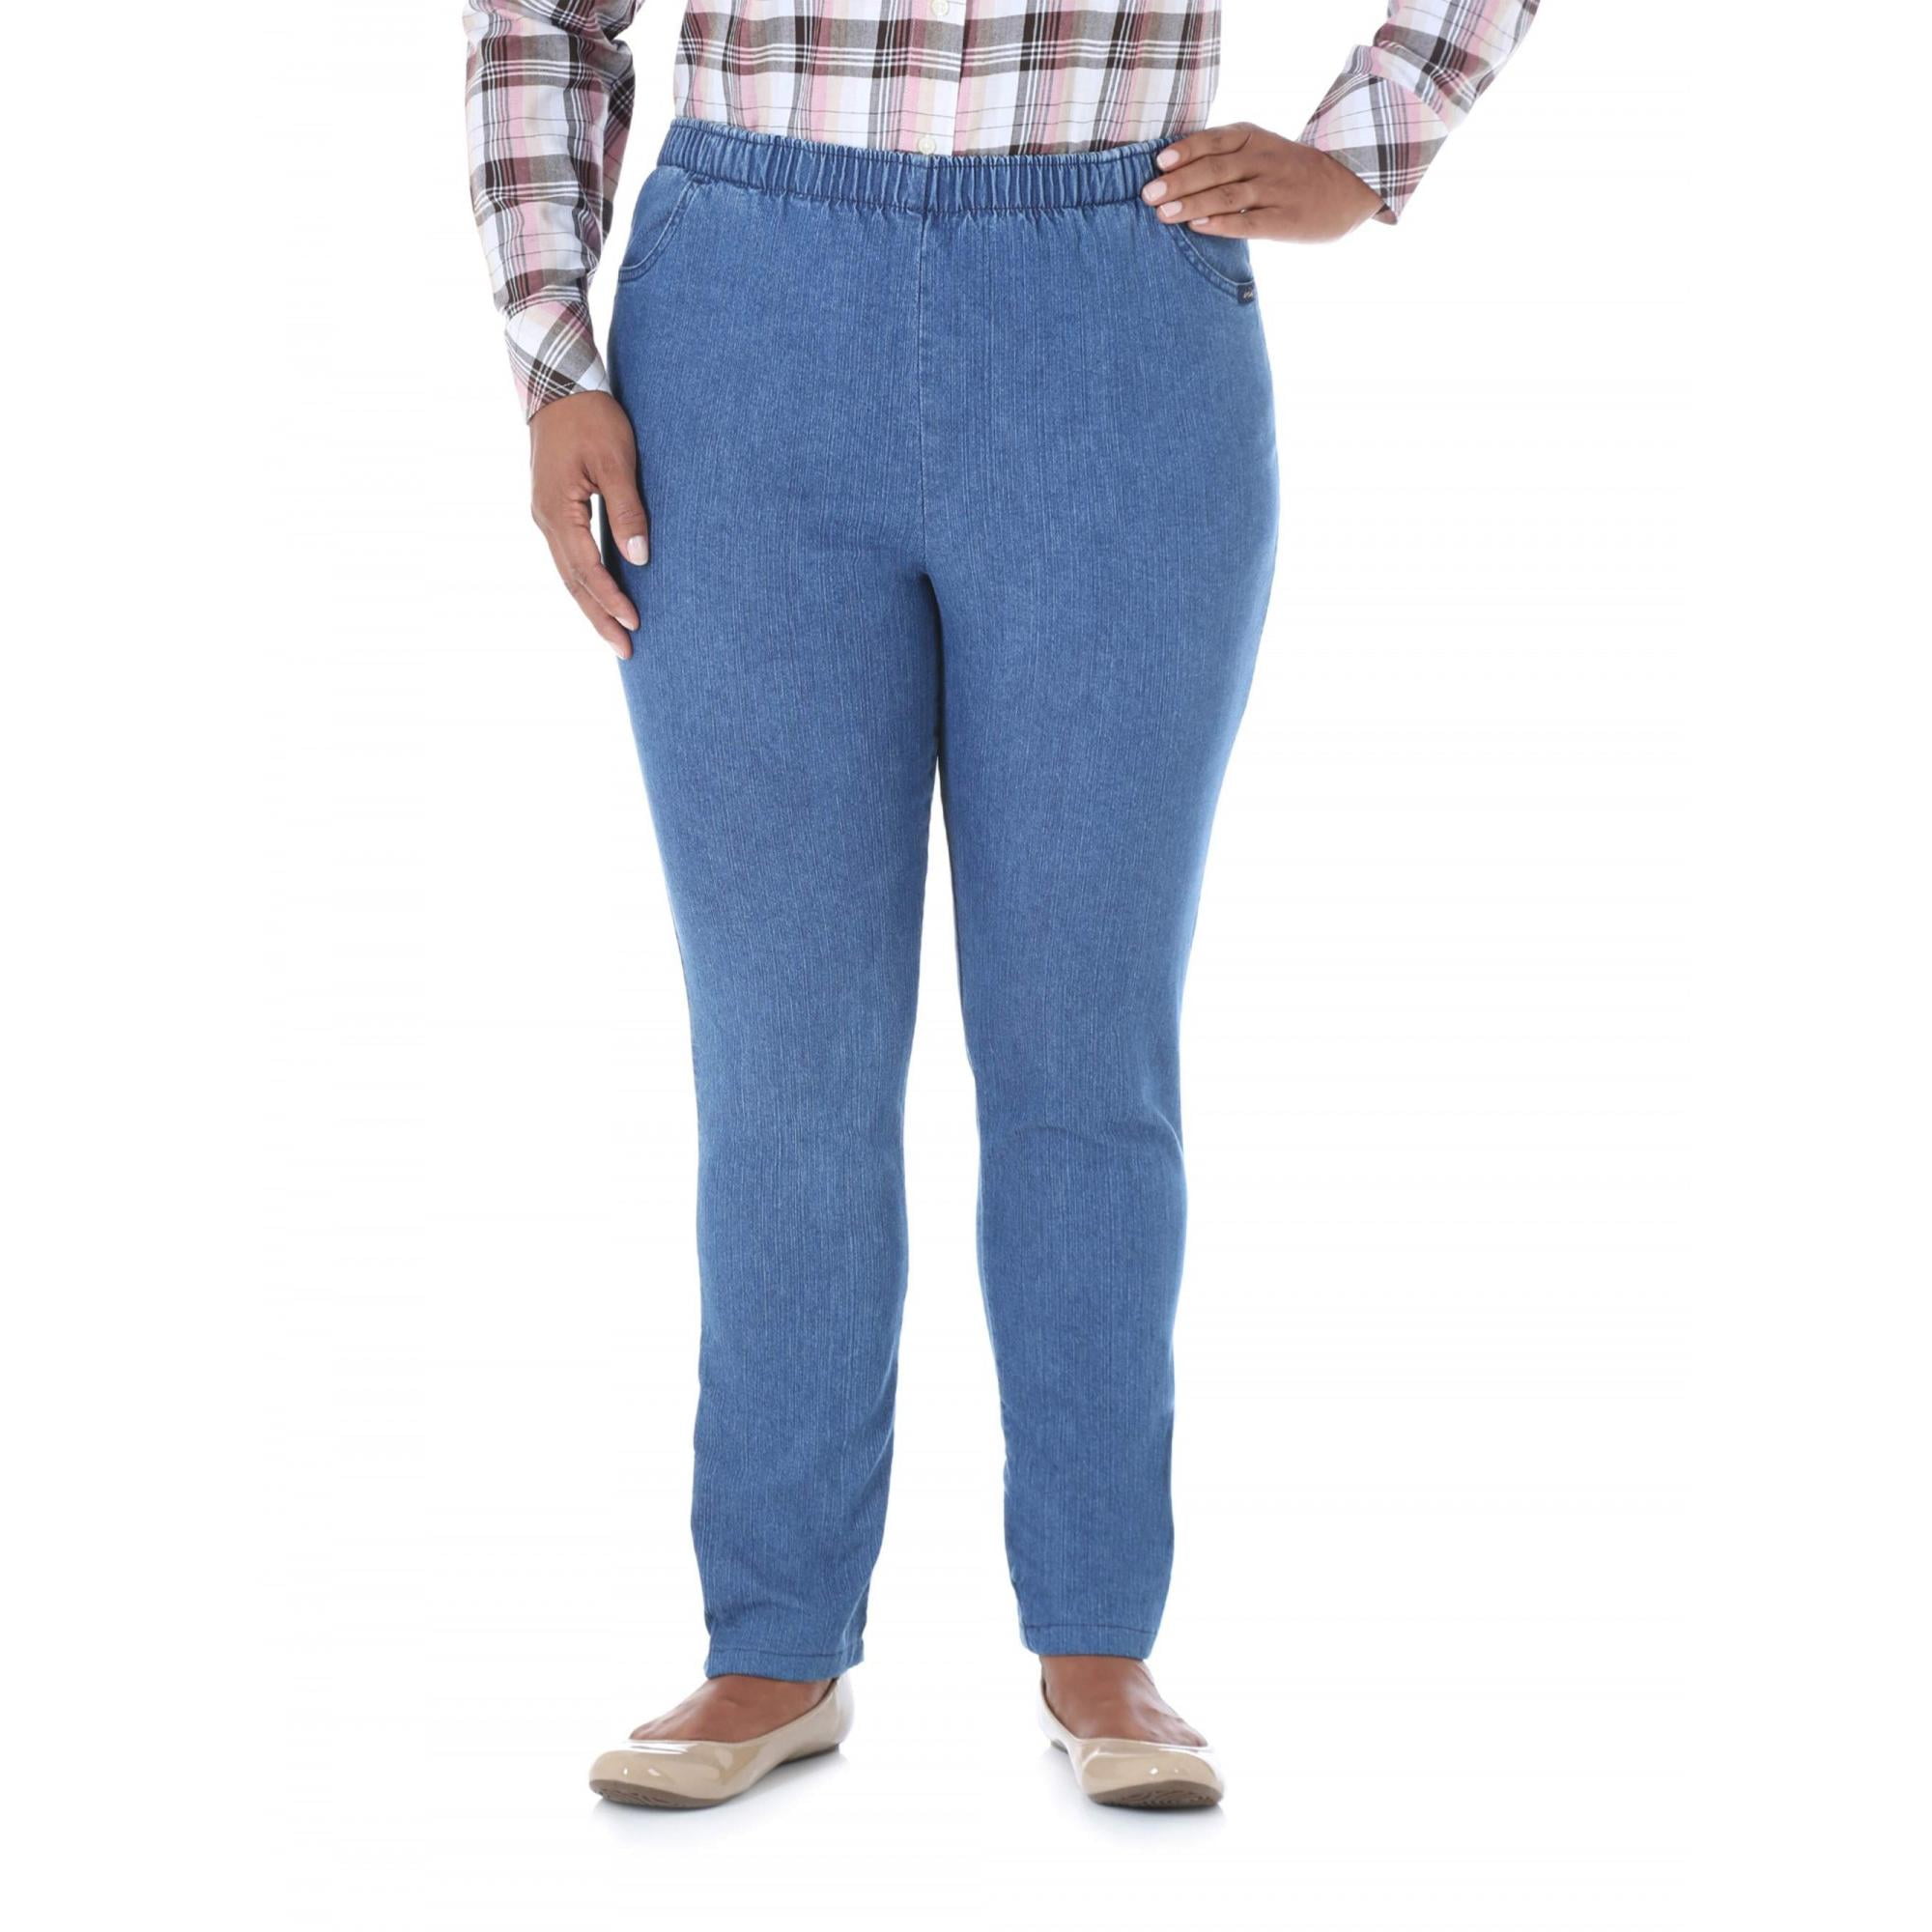 M.Michel Womens Plus Size Jumpsuit Romper Overalls Curvy Blue Denim Butt Lift Jeans Skinny Stretch-R203